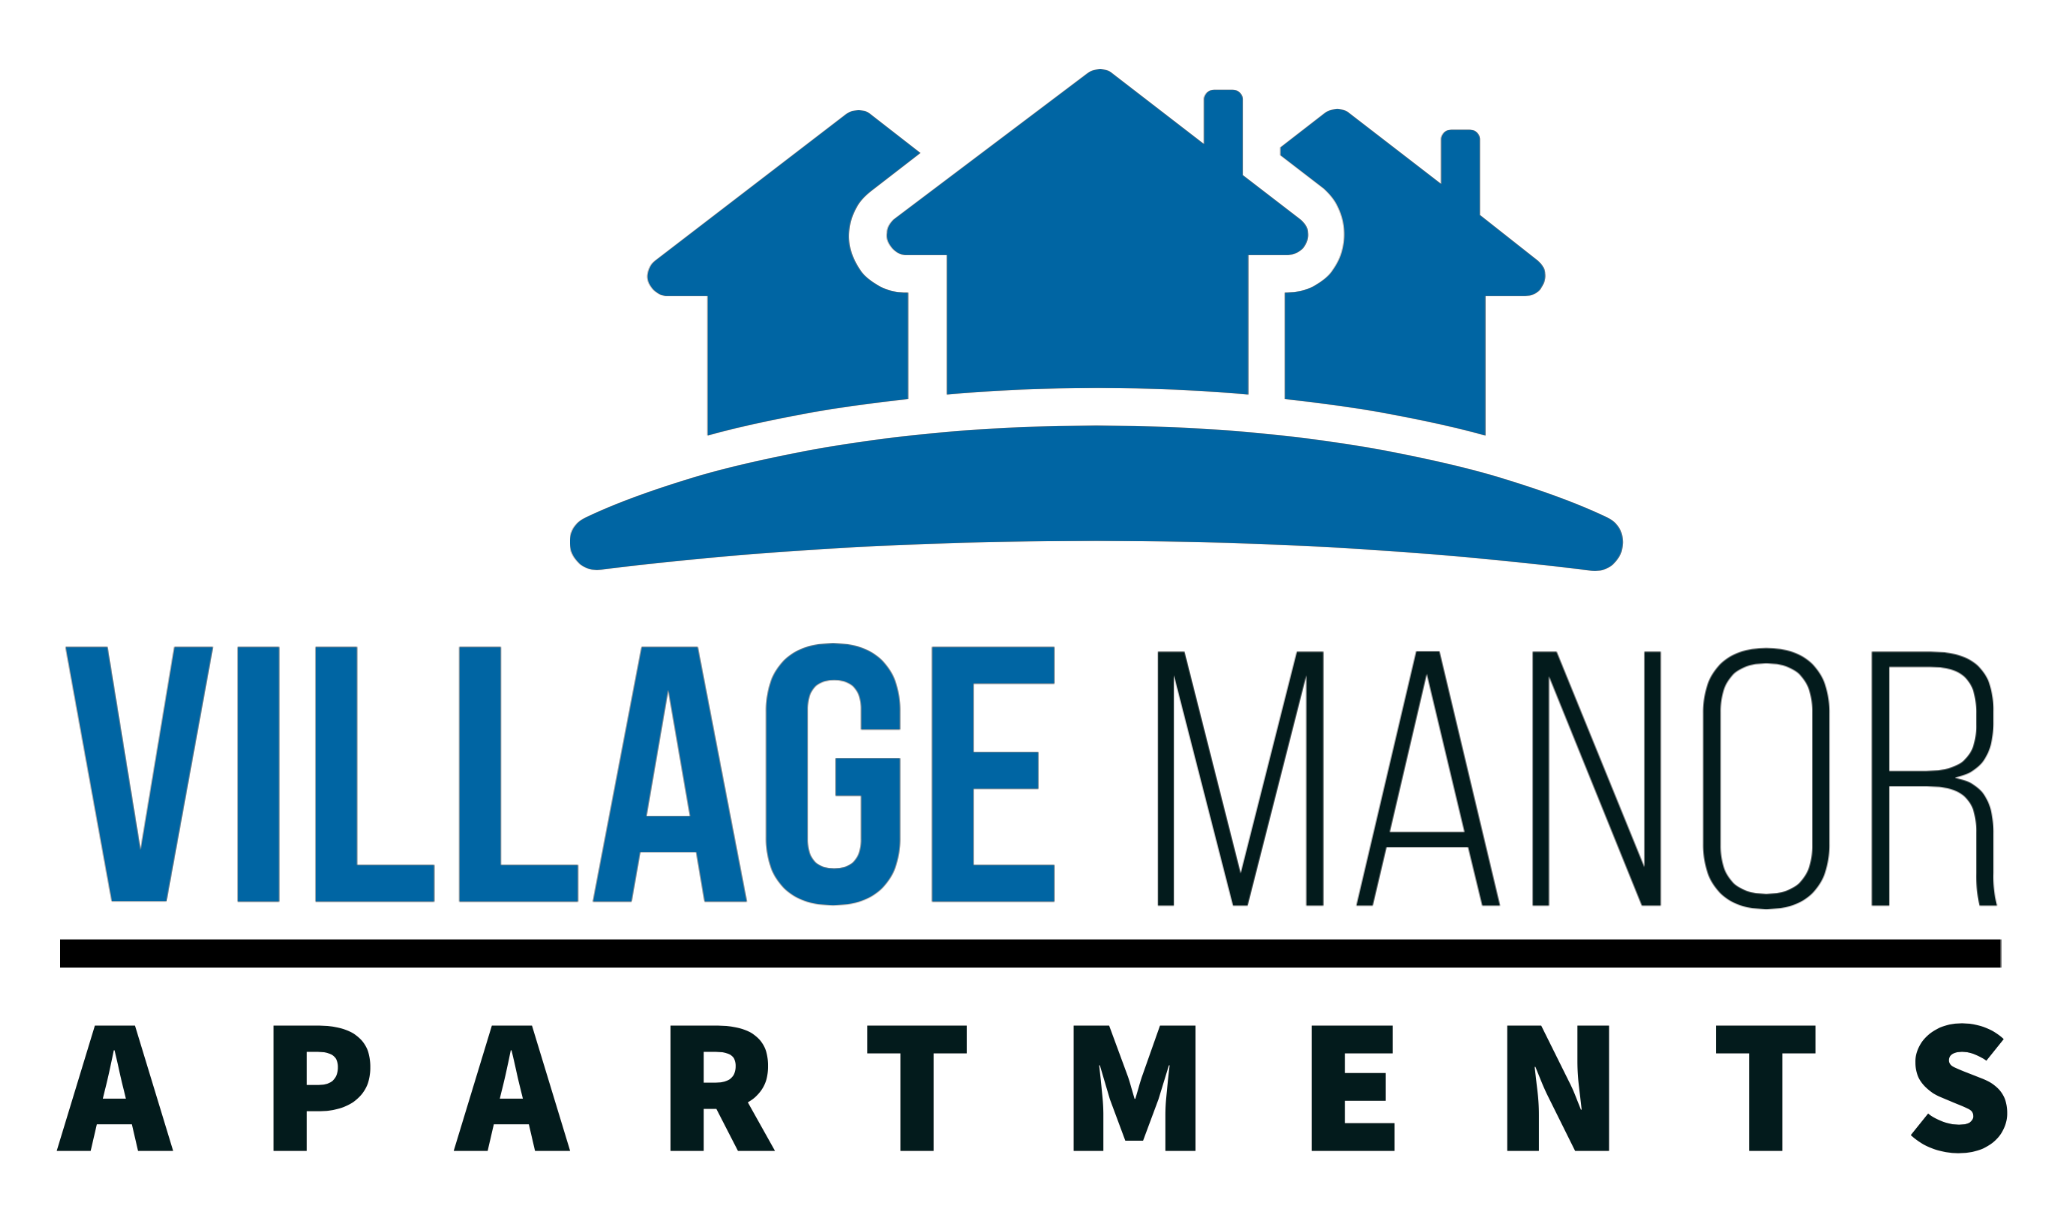 Village manor apartment logo